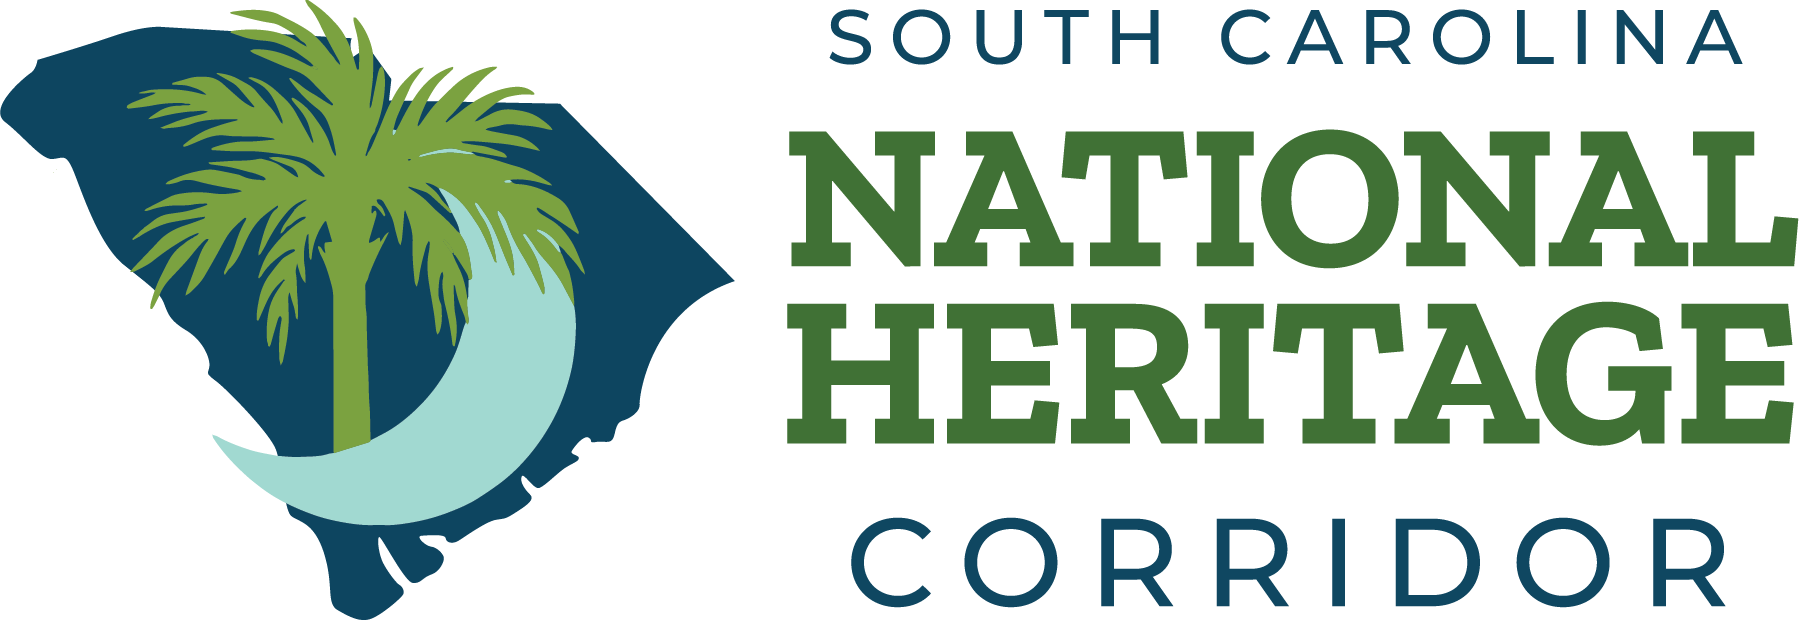 South Carolina National Heritage Corridor